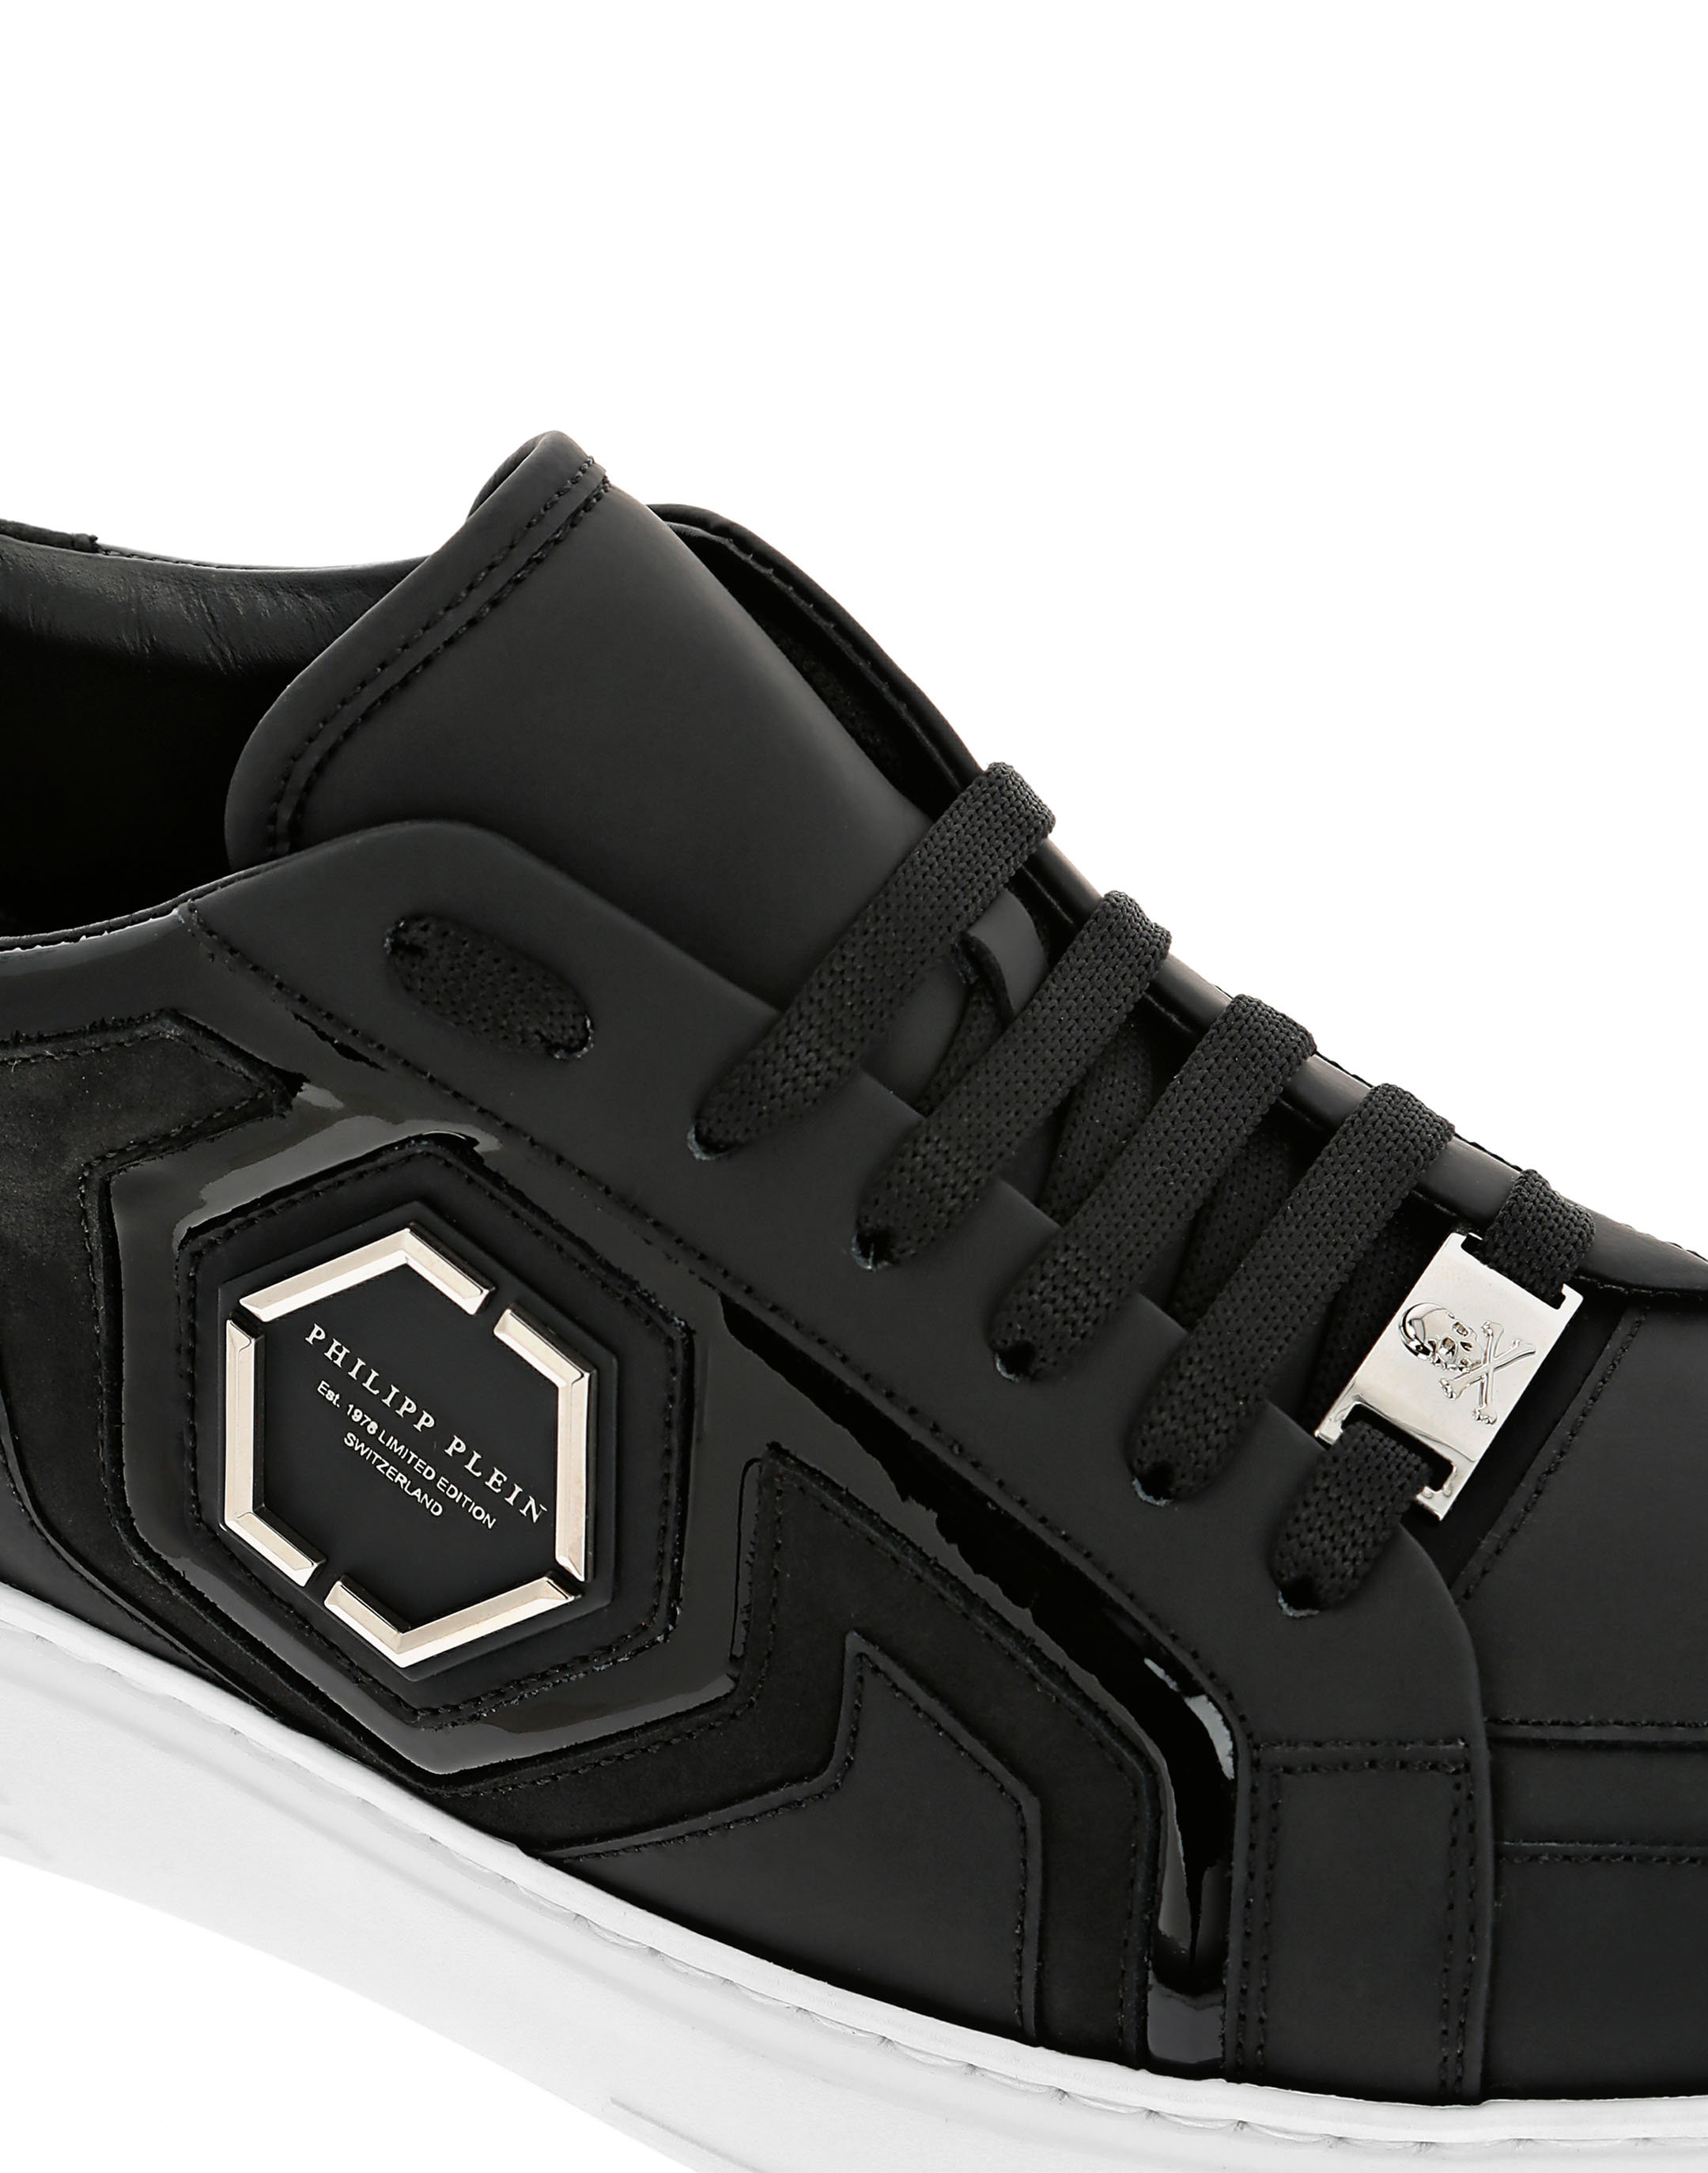 Lo-Top Sneakers Hexagon | Philipp Plein Outlet